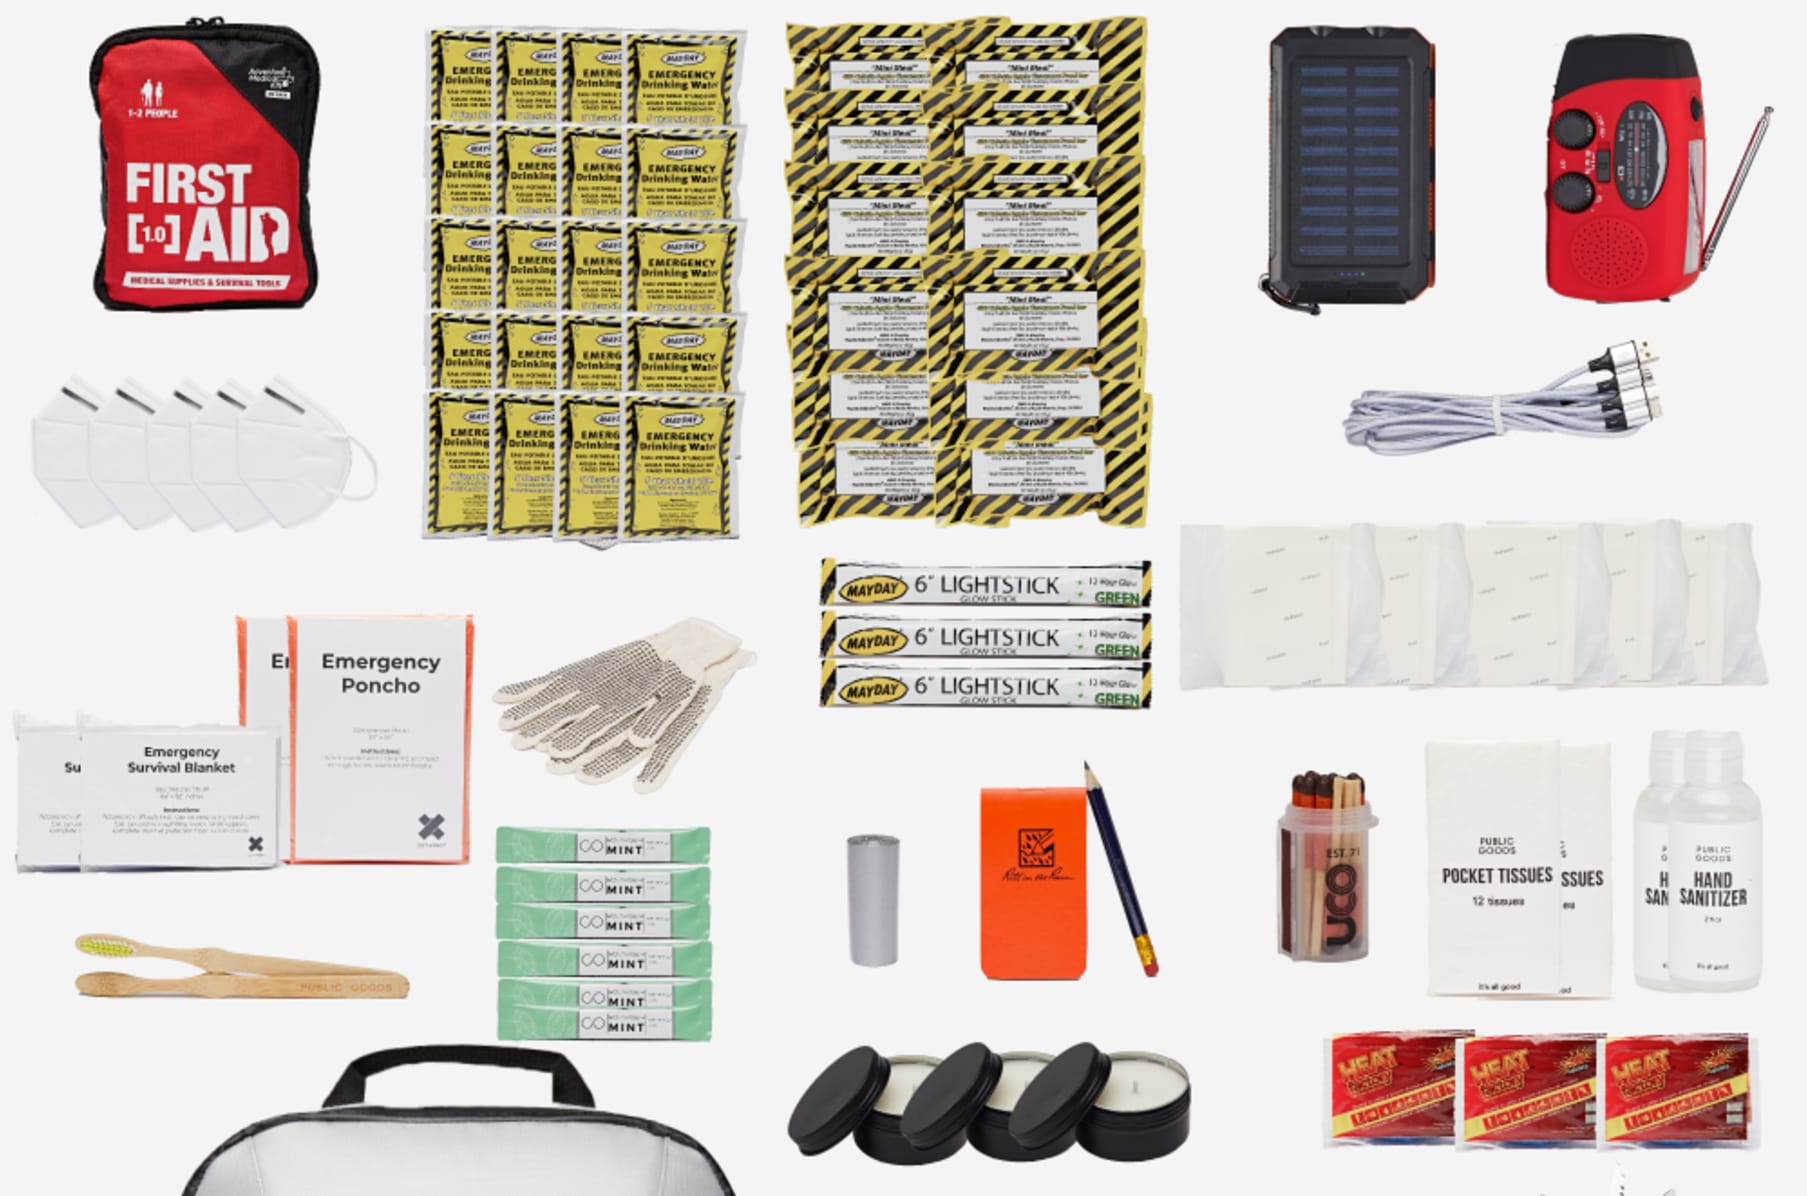 GO BAG emergency survival kit (Handy) Grab bag